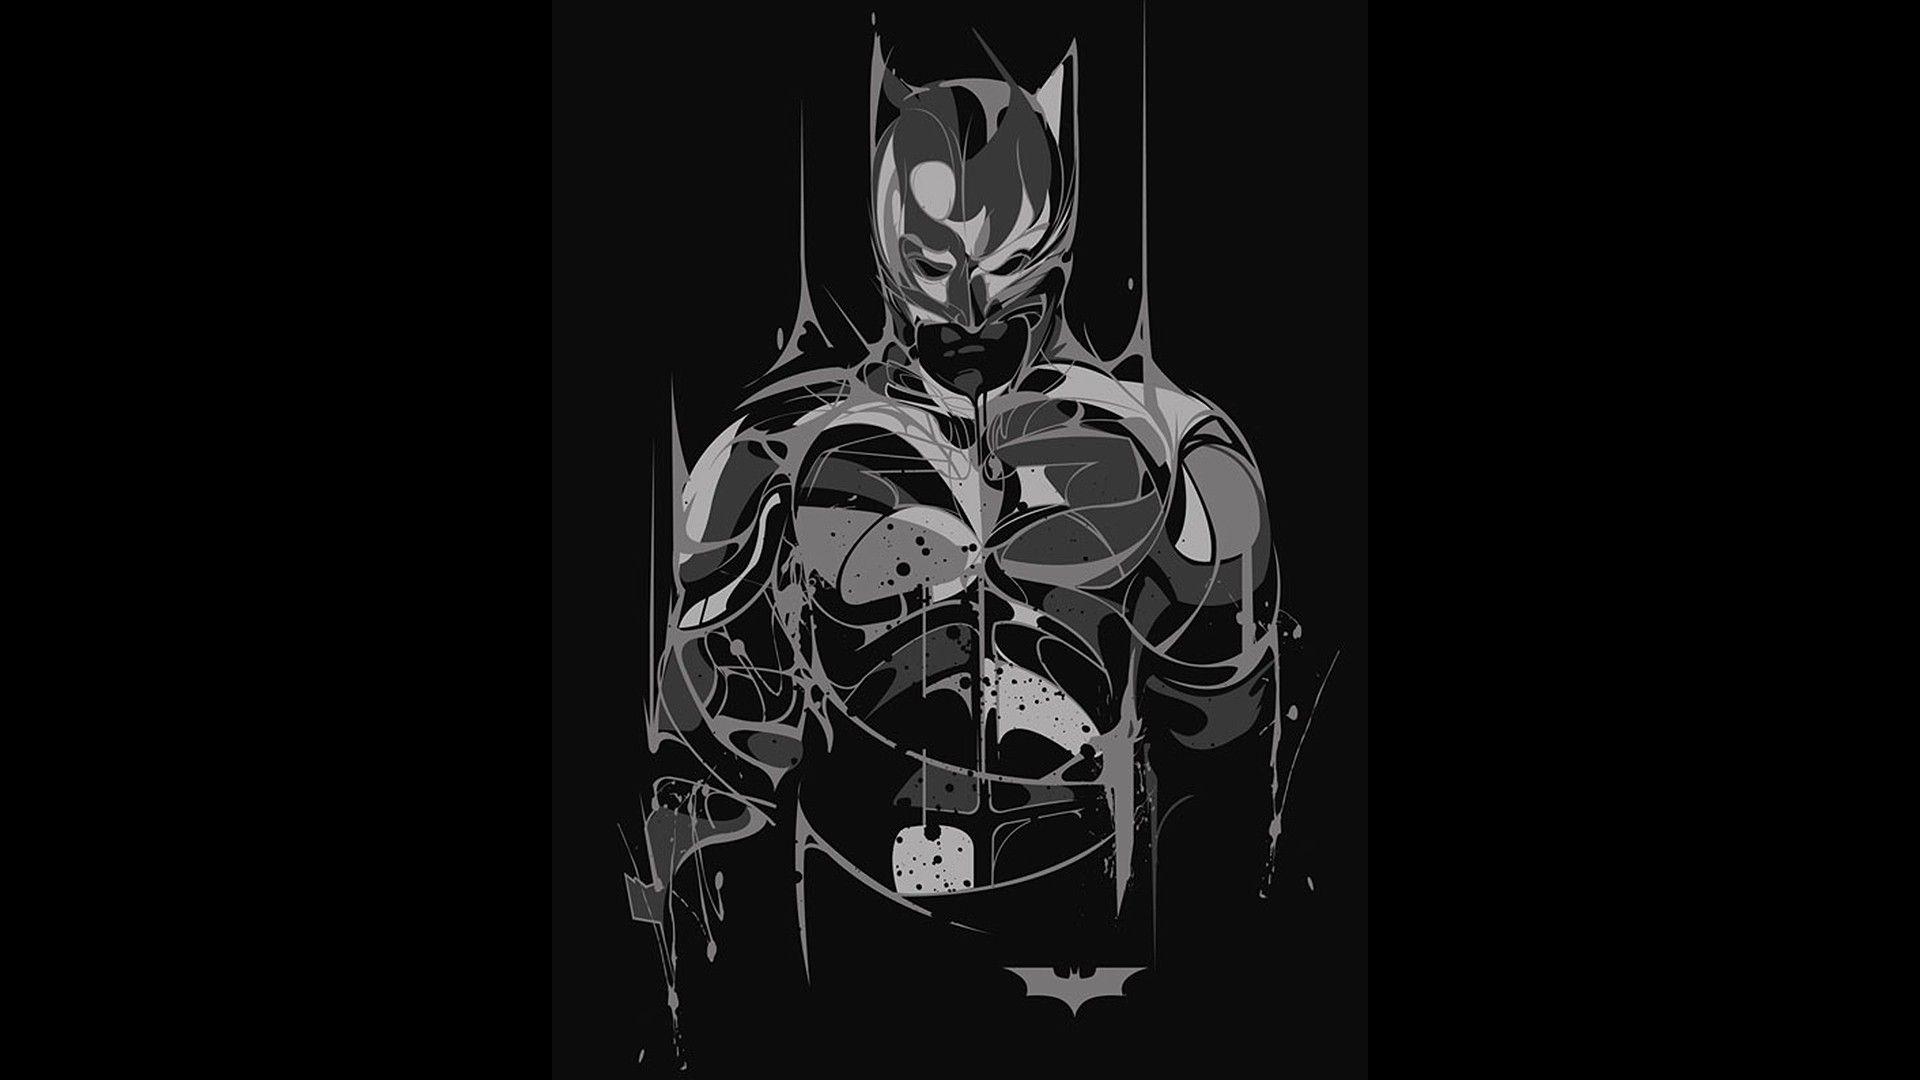 Batman, DC Comics, bat, hero, fan art, black background, Bruce Wayne wallpaper